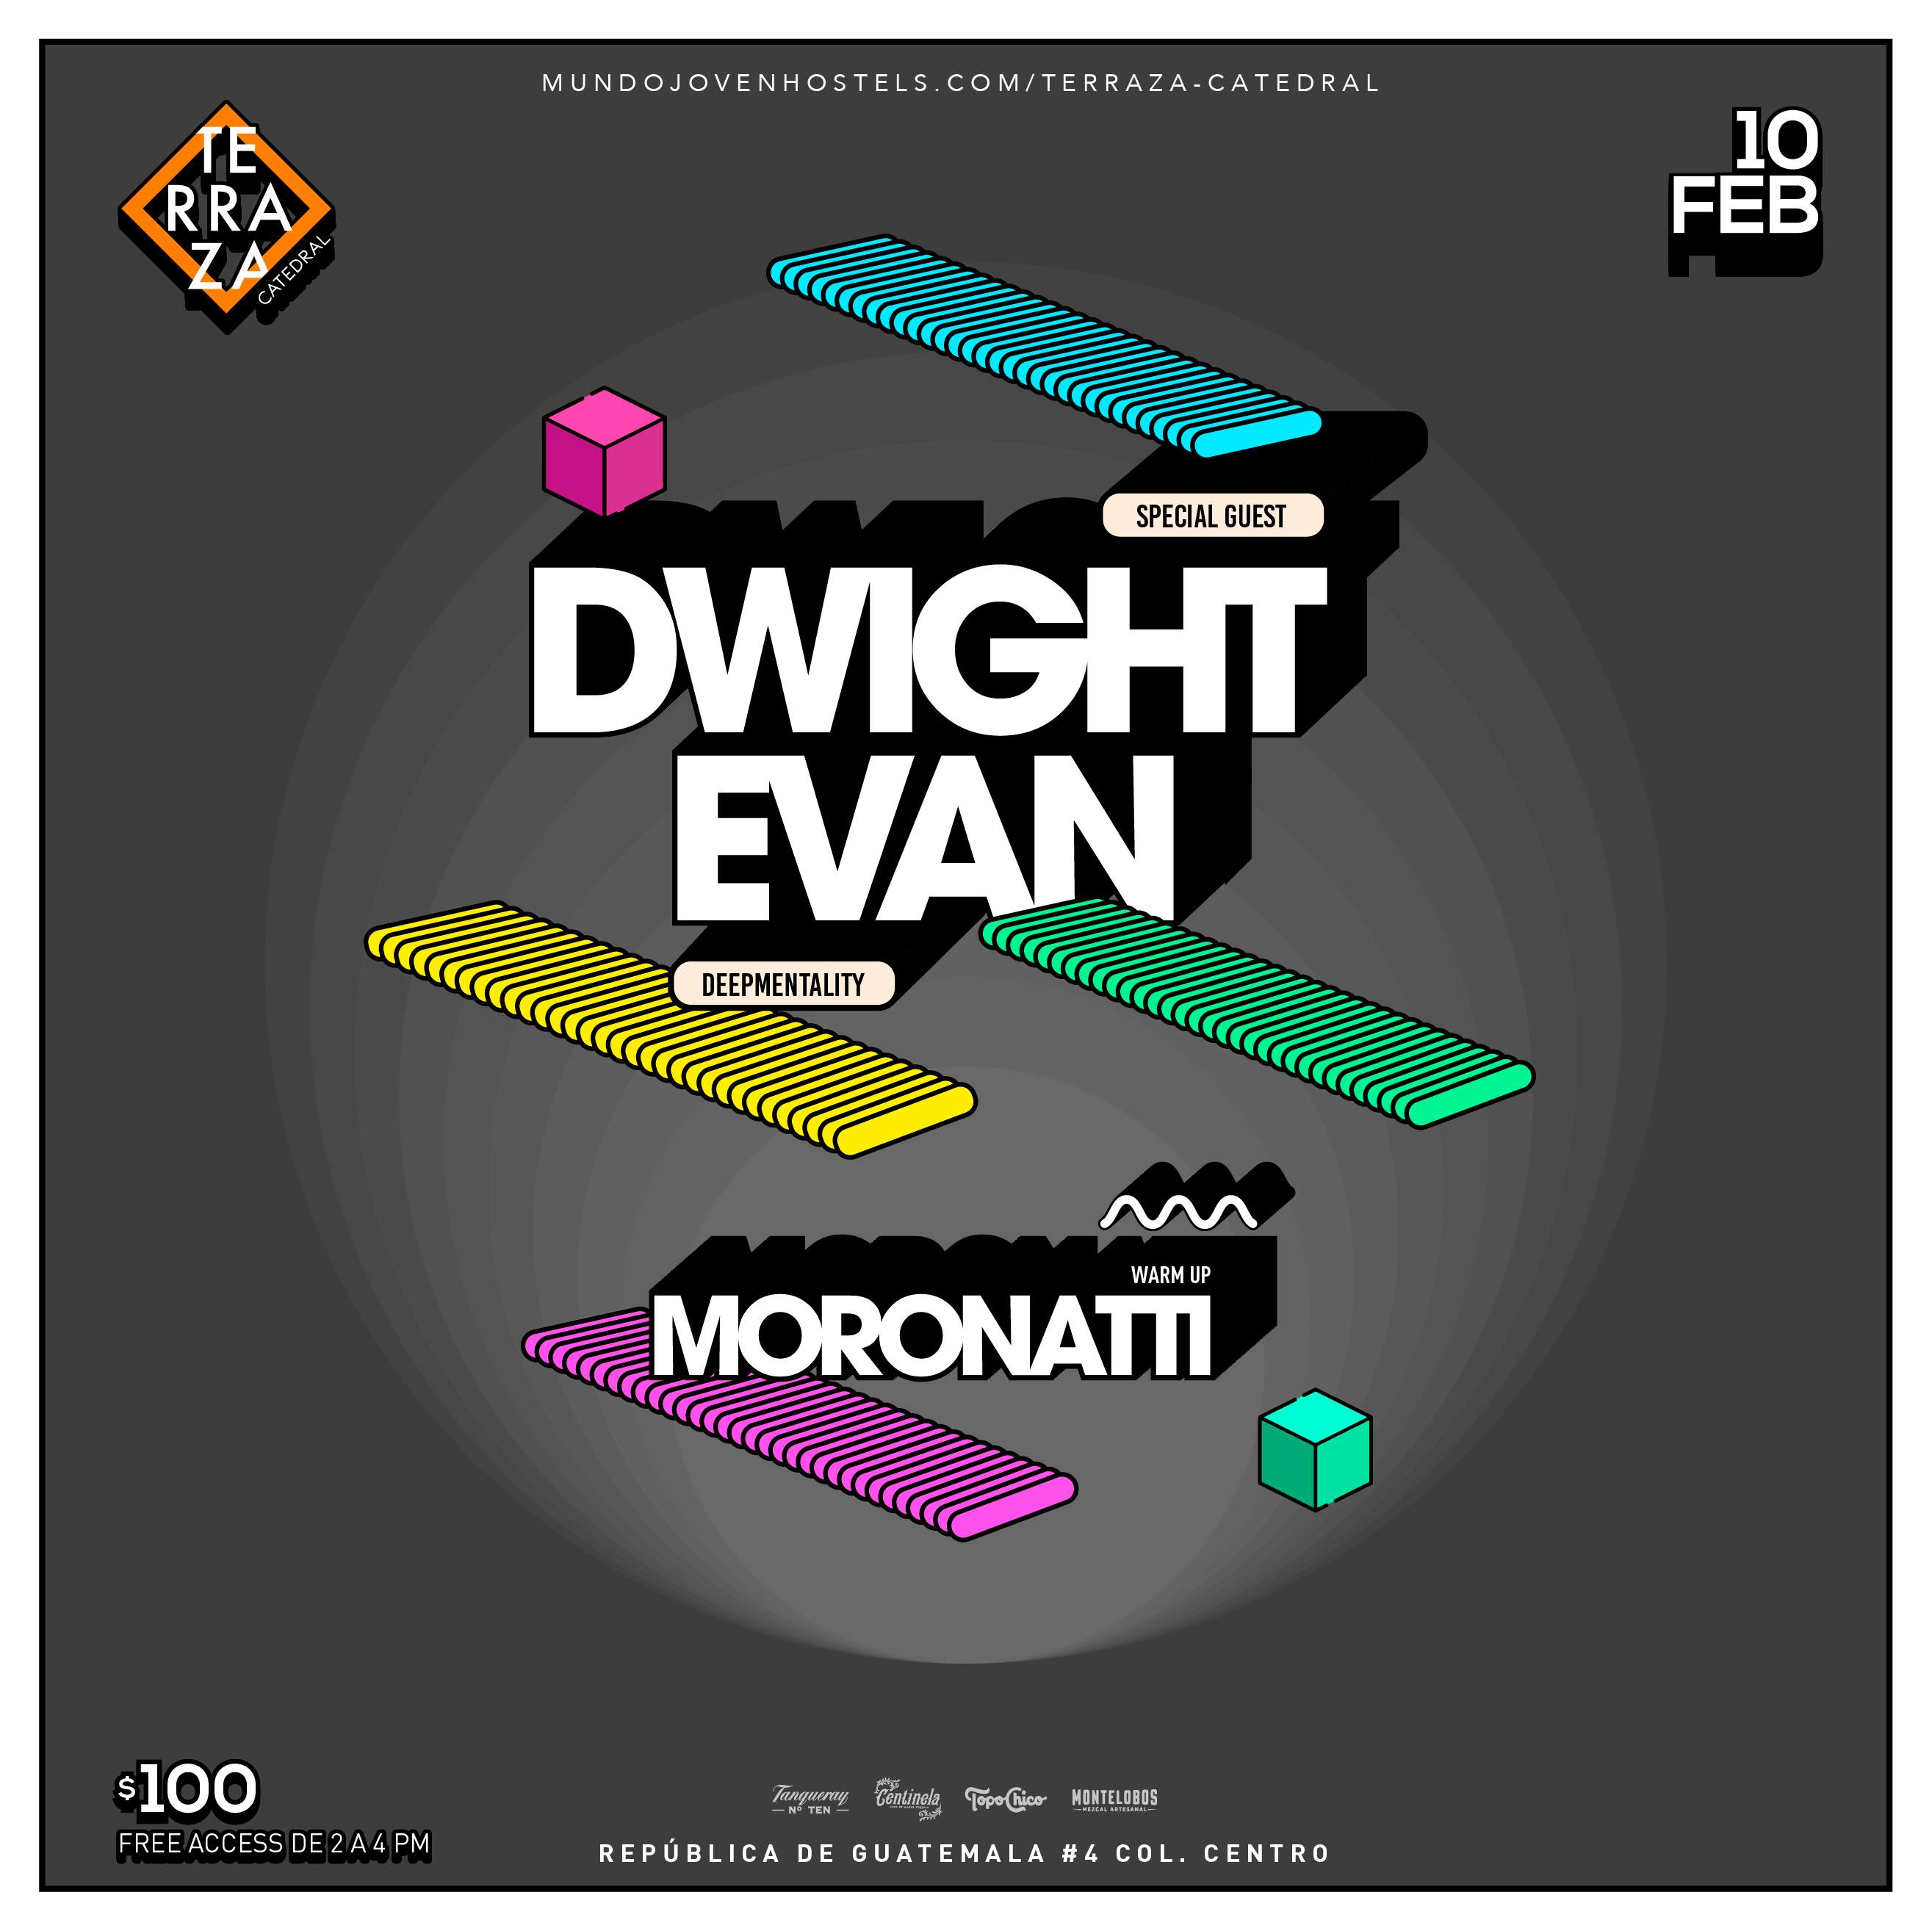 Dwight Evan + MORONATTI - フライヤー裏